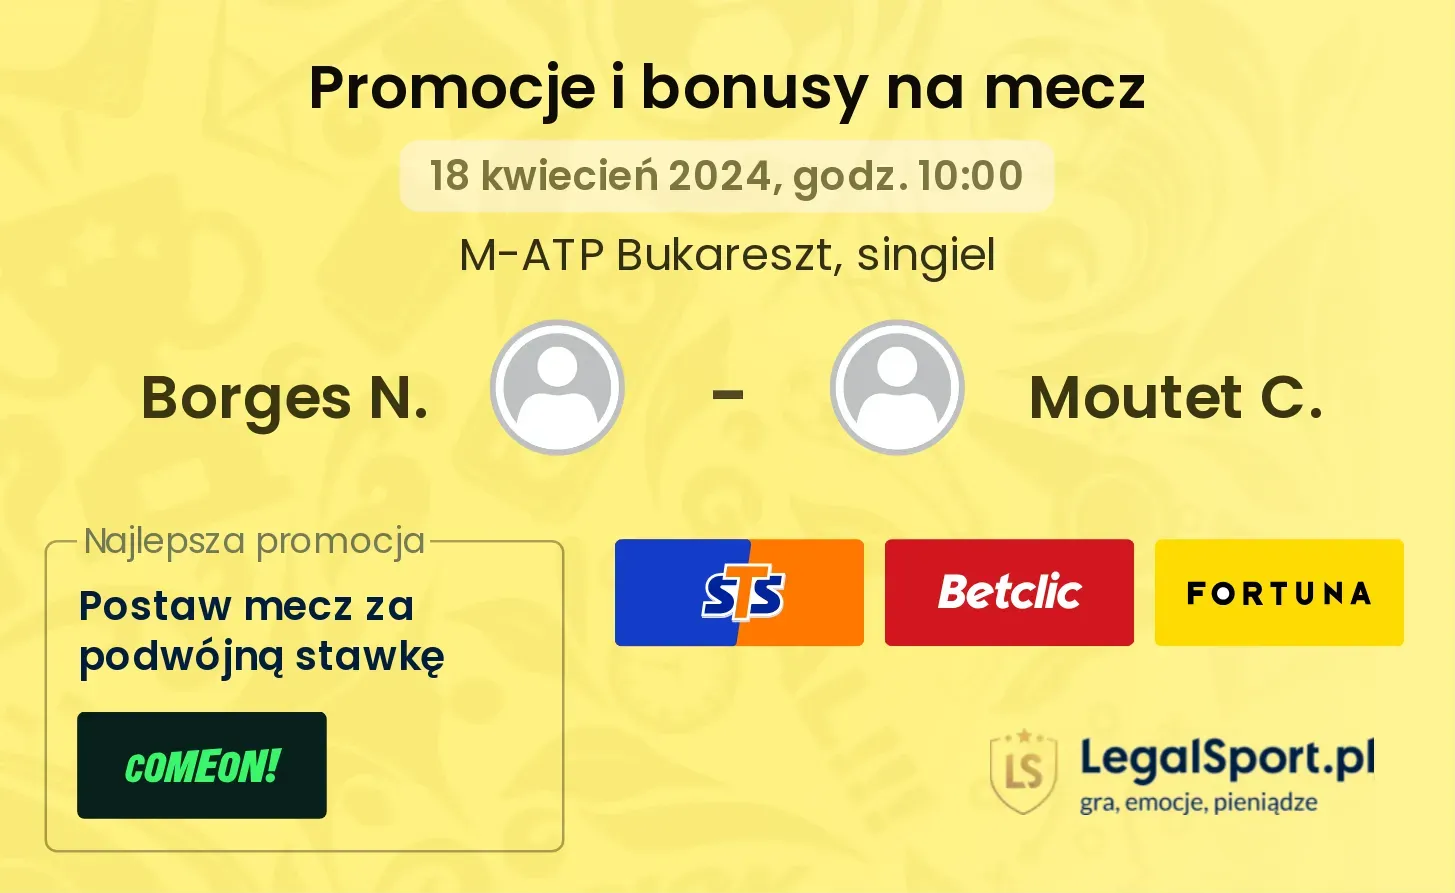 Borges N. - Moutet C. promocje bonusy na mecz